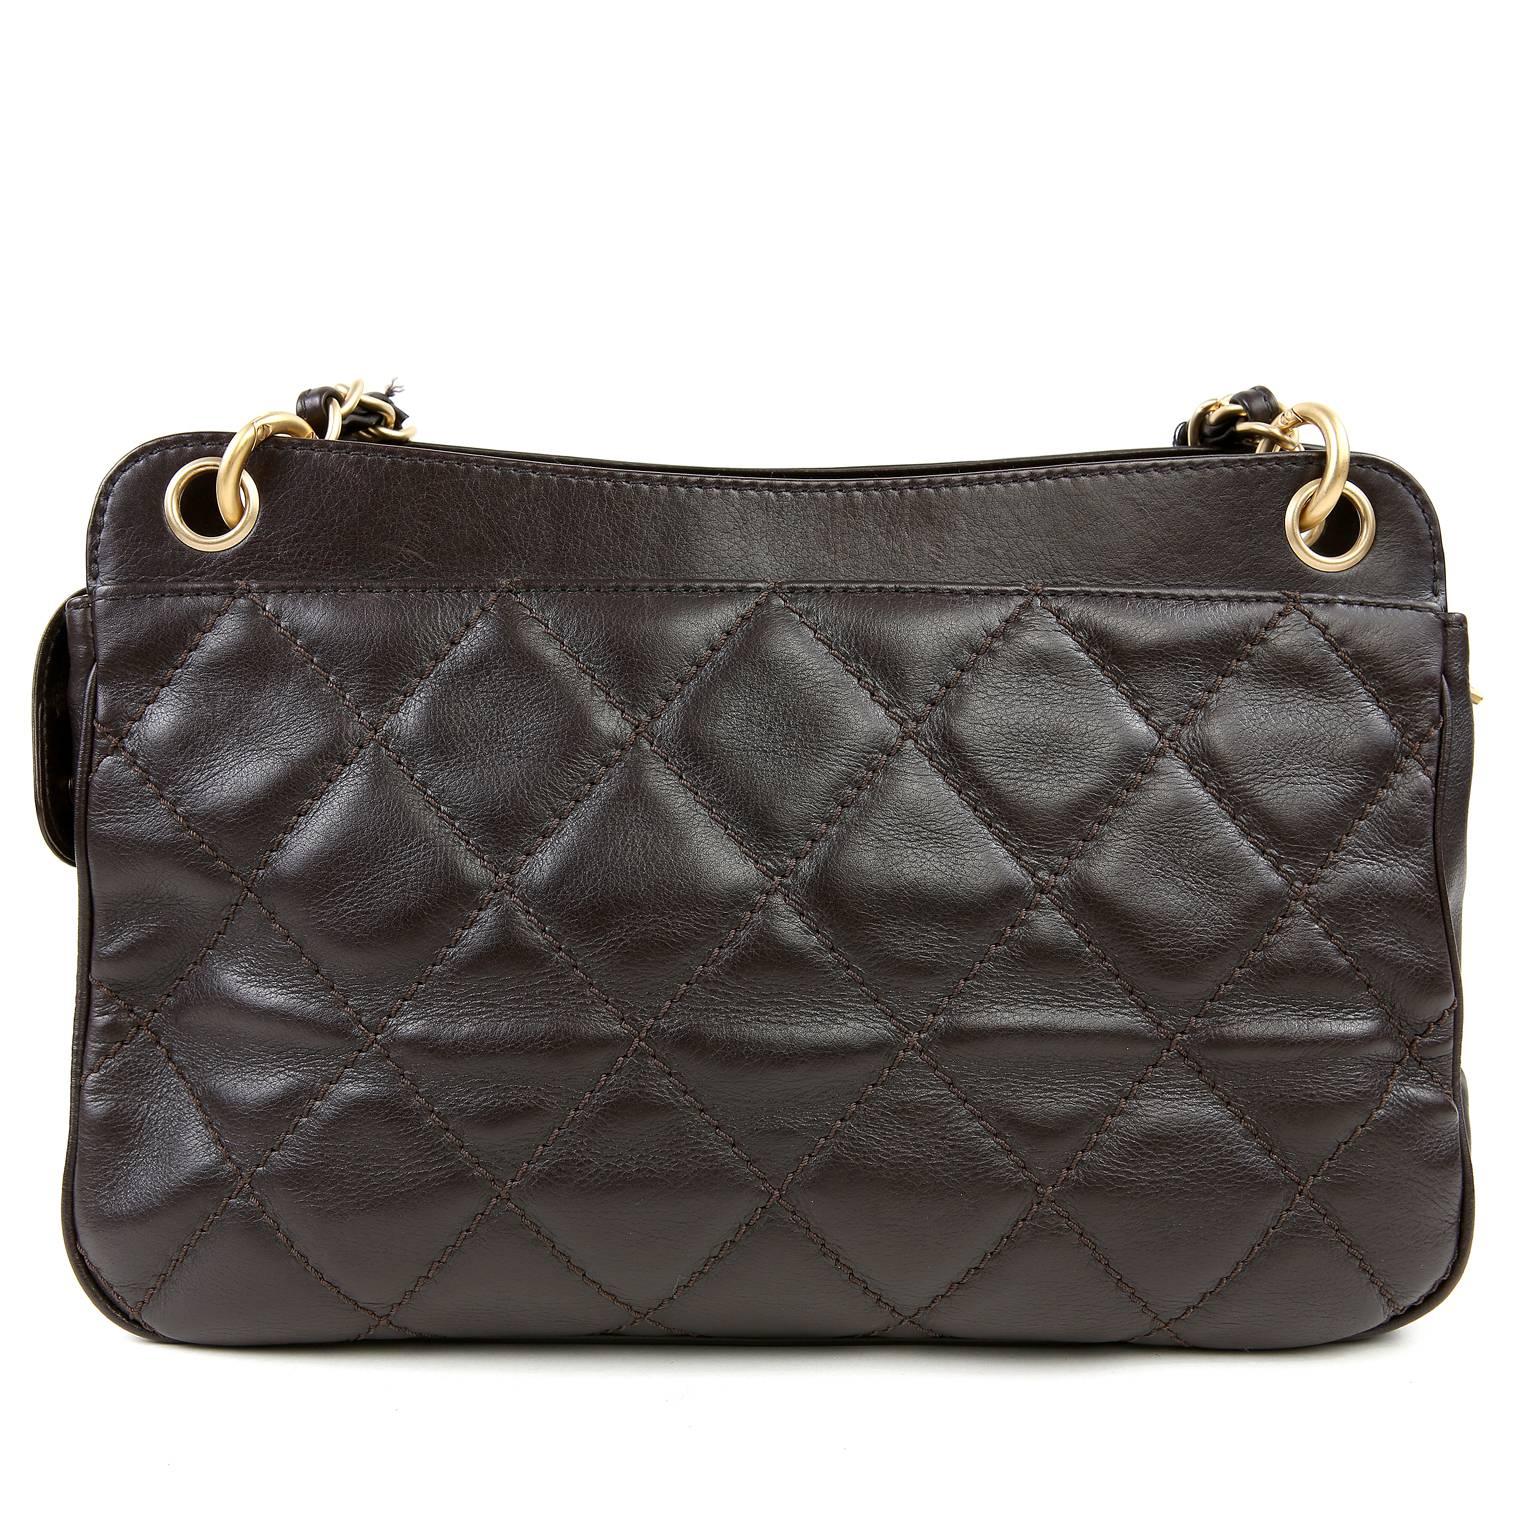 Black Chanel Dark Brown Leather Quilted Pocket Tote Bag For Sale